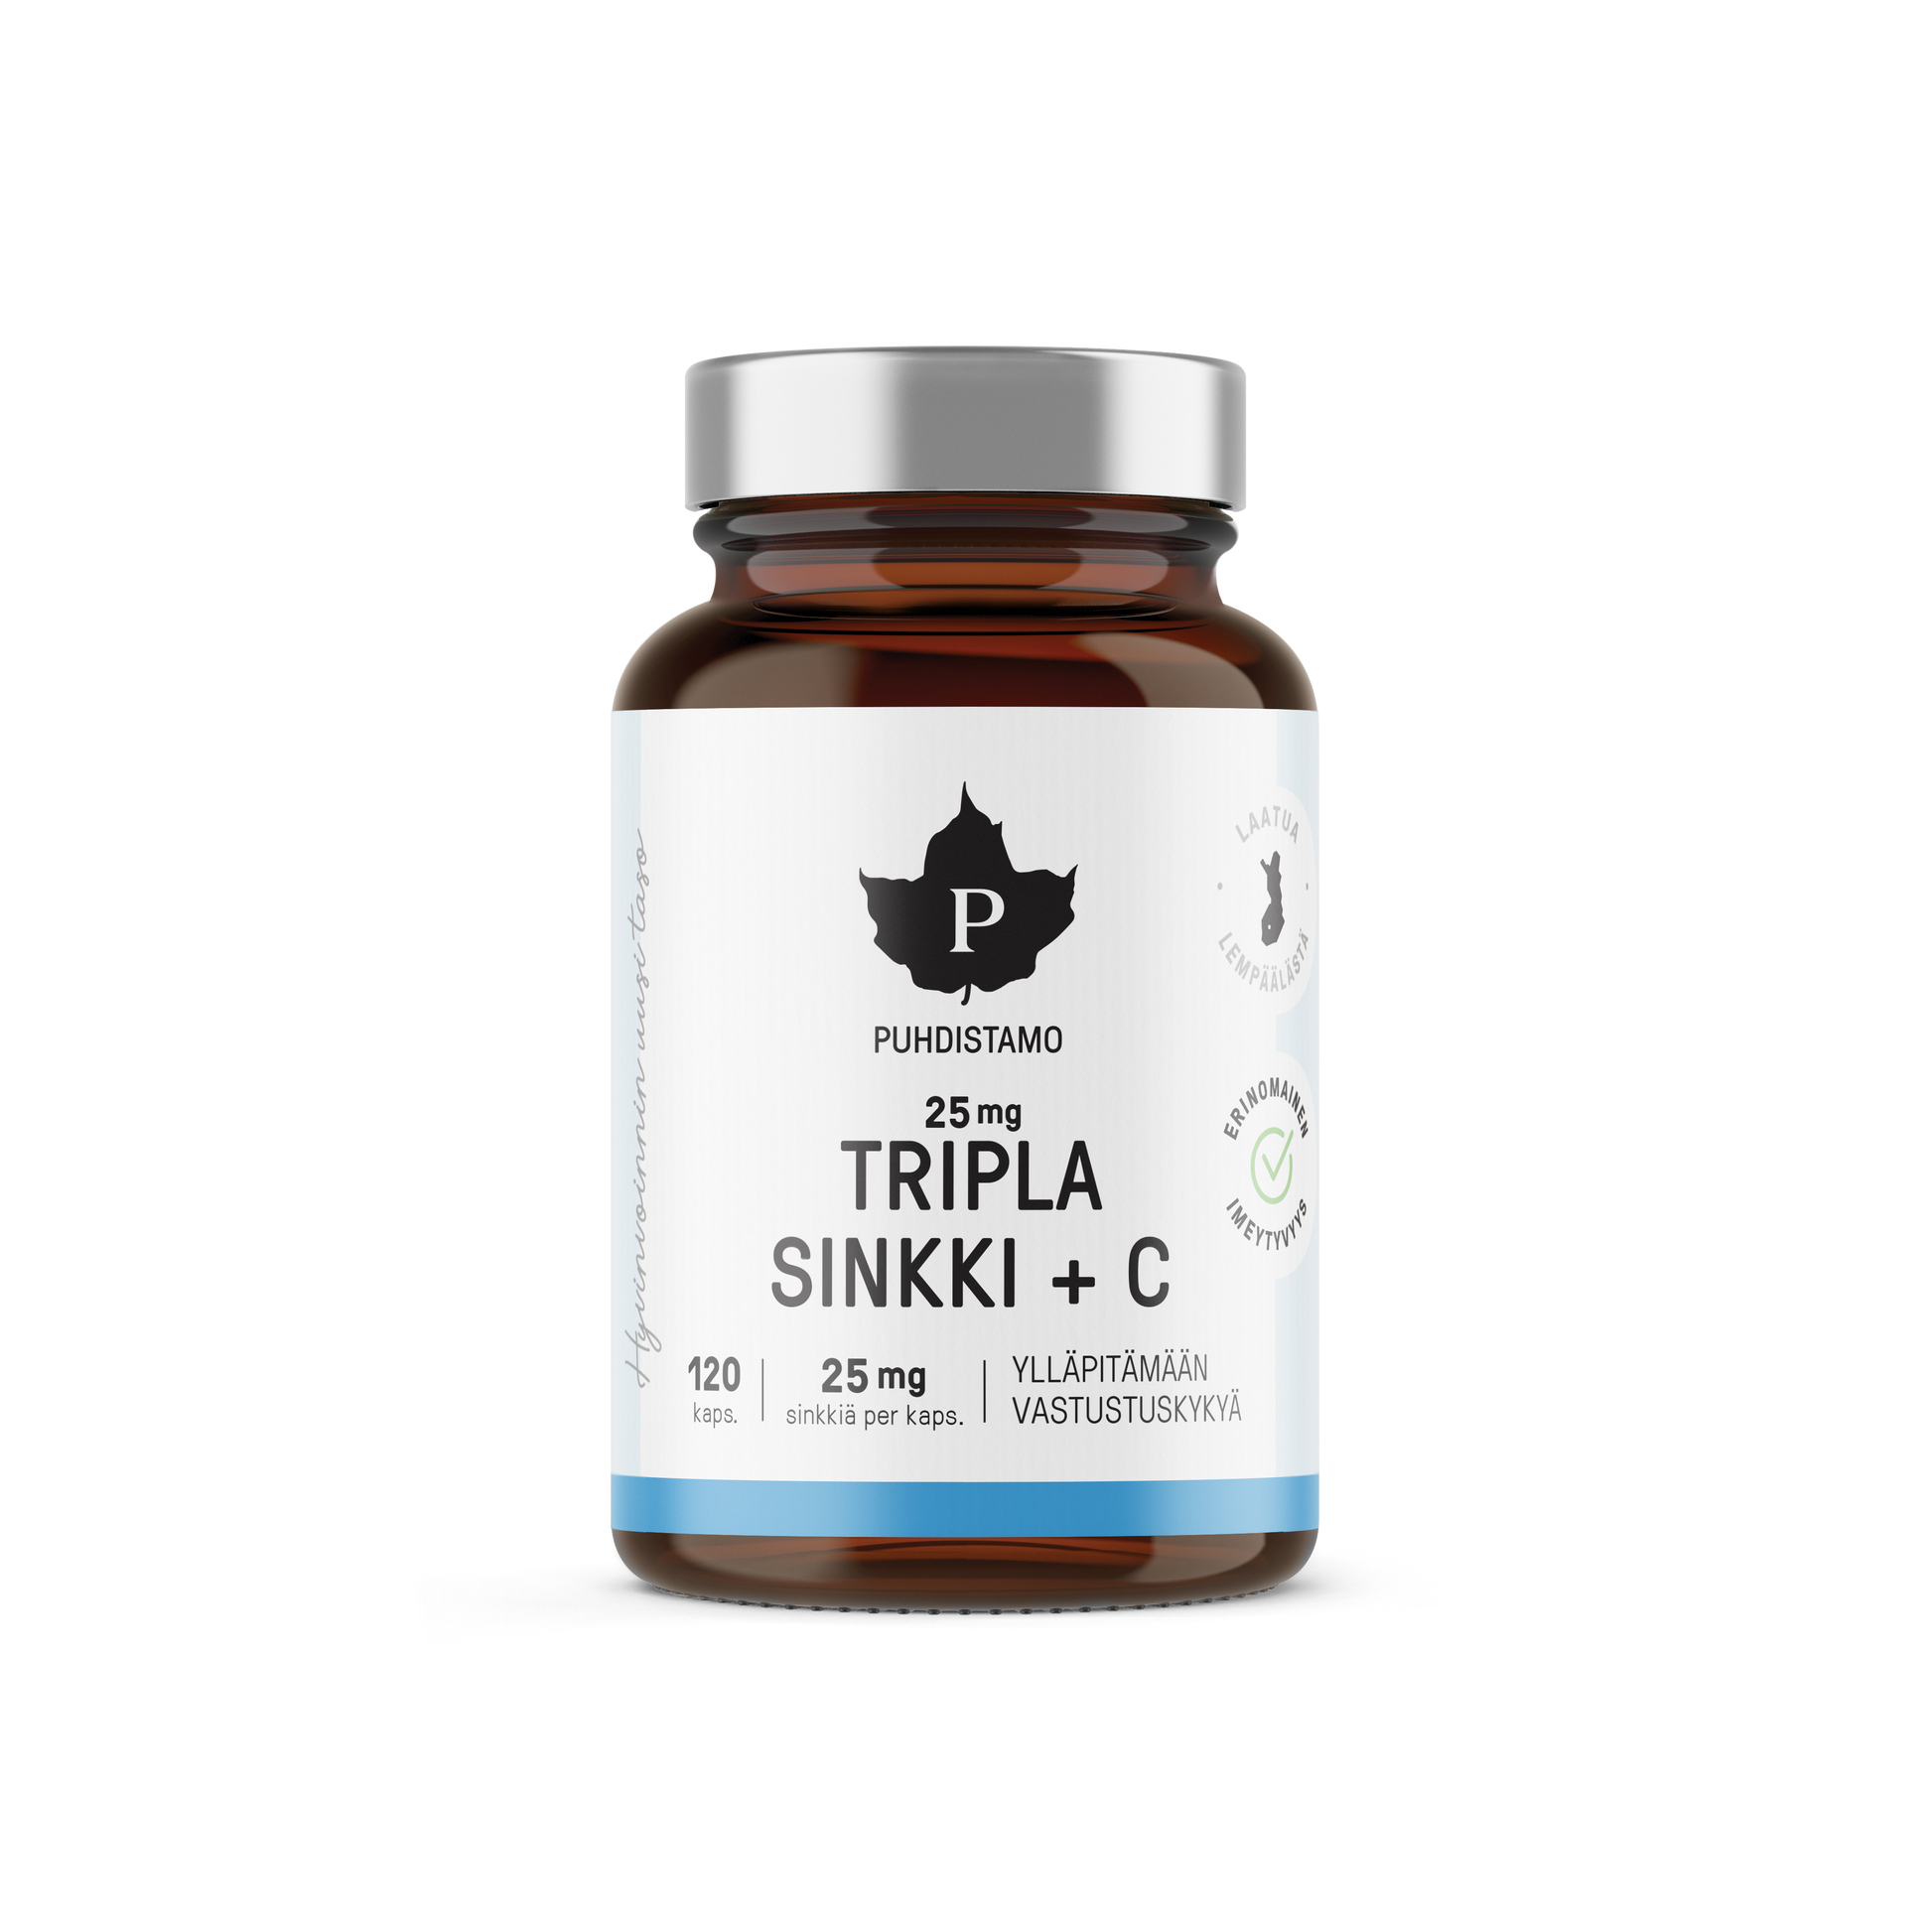 Puhdistamo Tripla Sinkki 25 mg + C vitamiini 120 kapselia - w2w terveys ja hyvinvointi